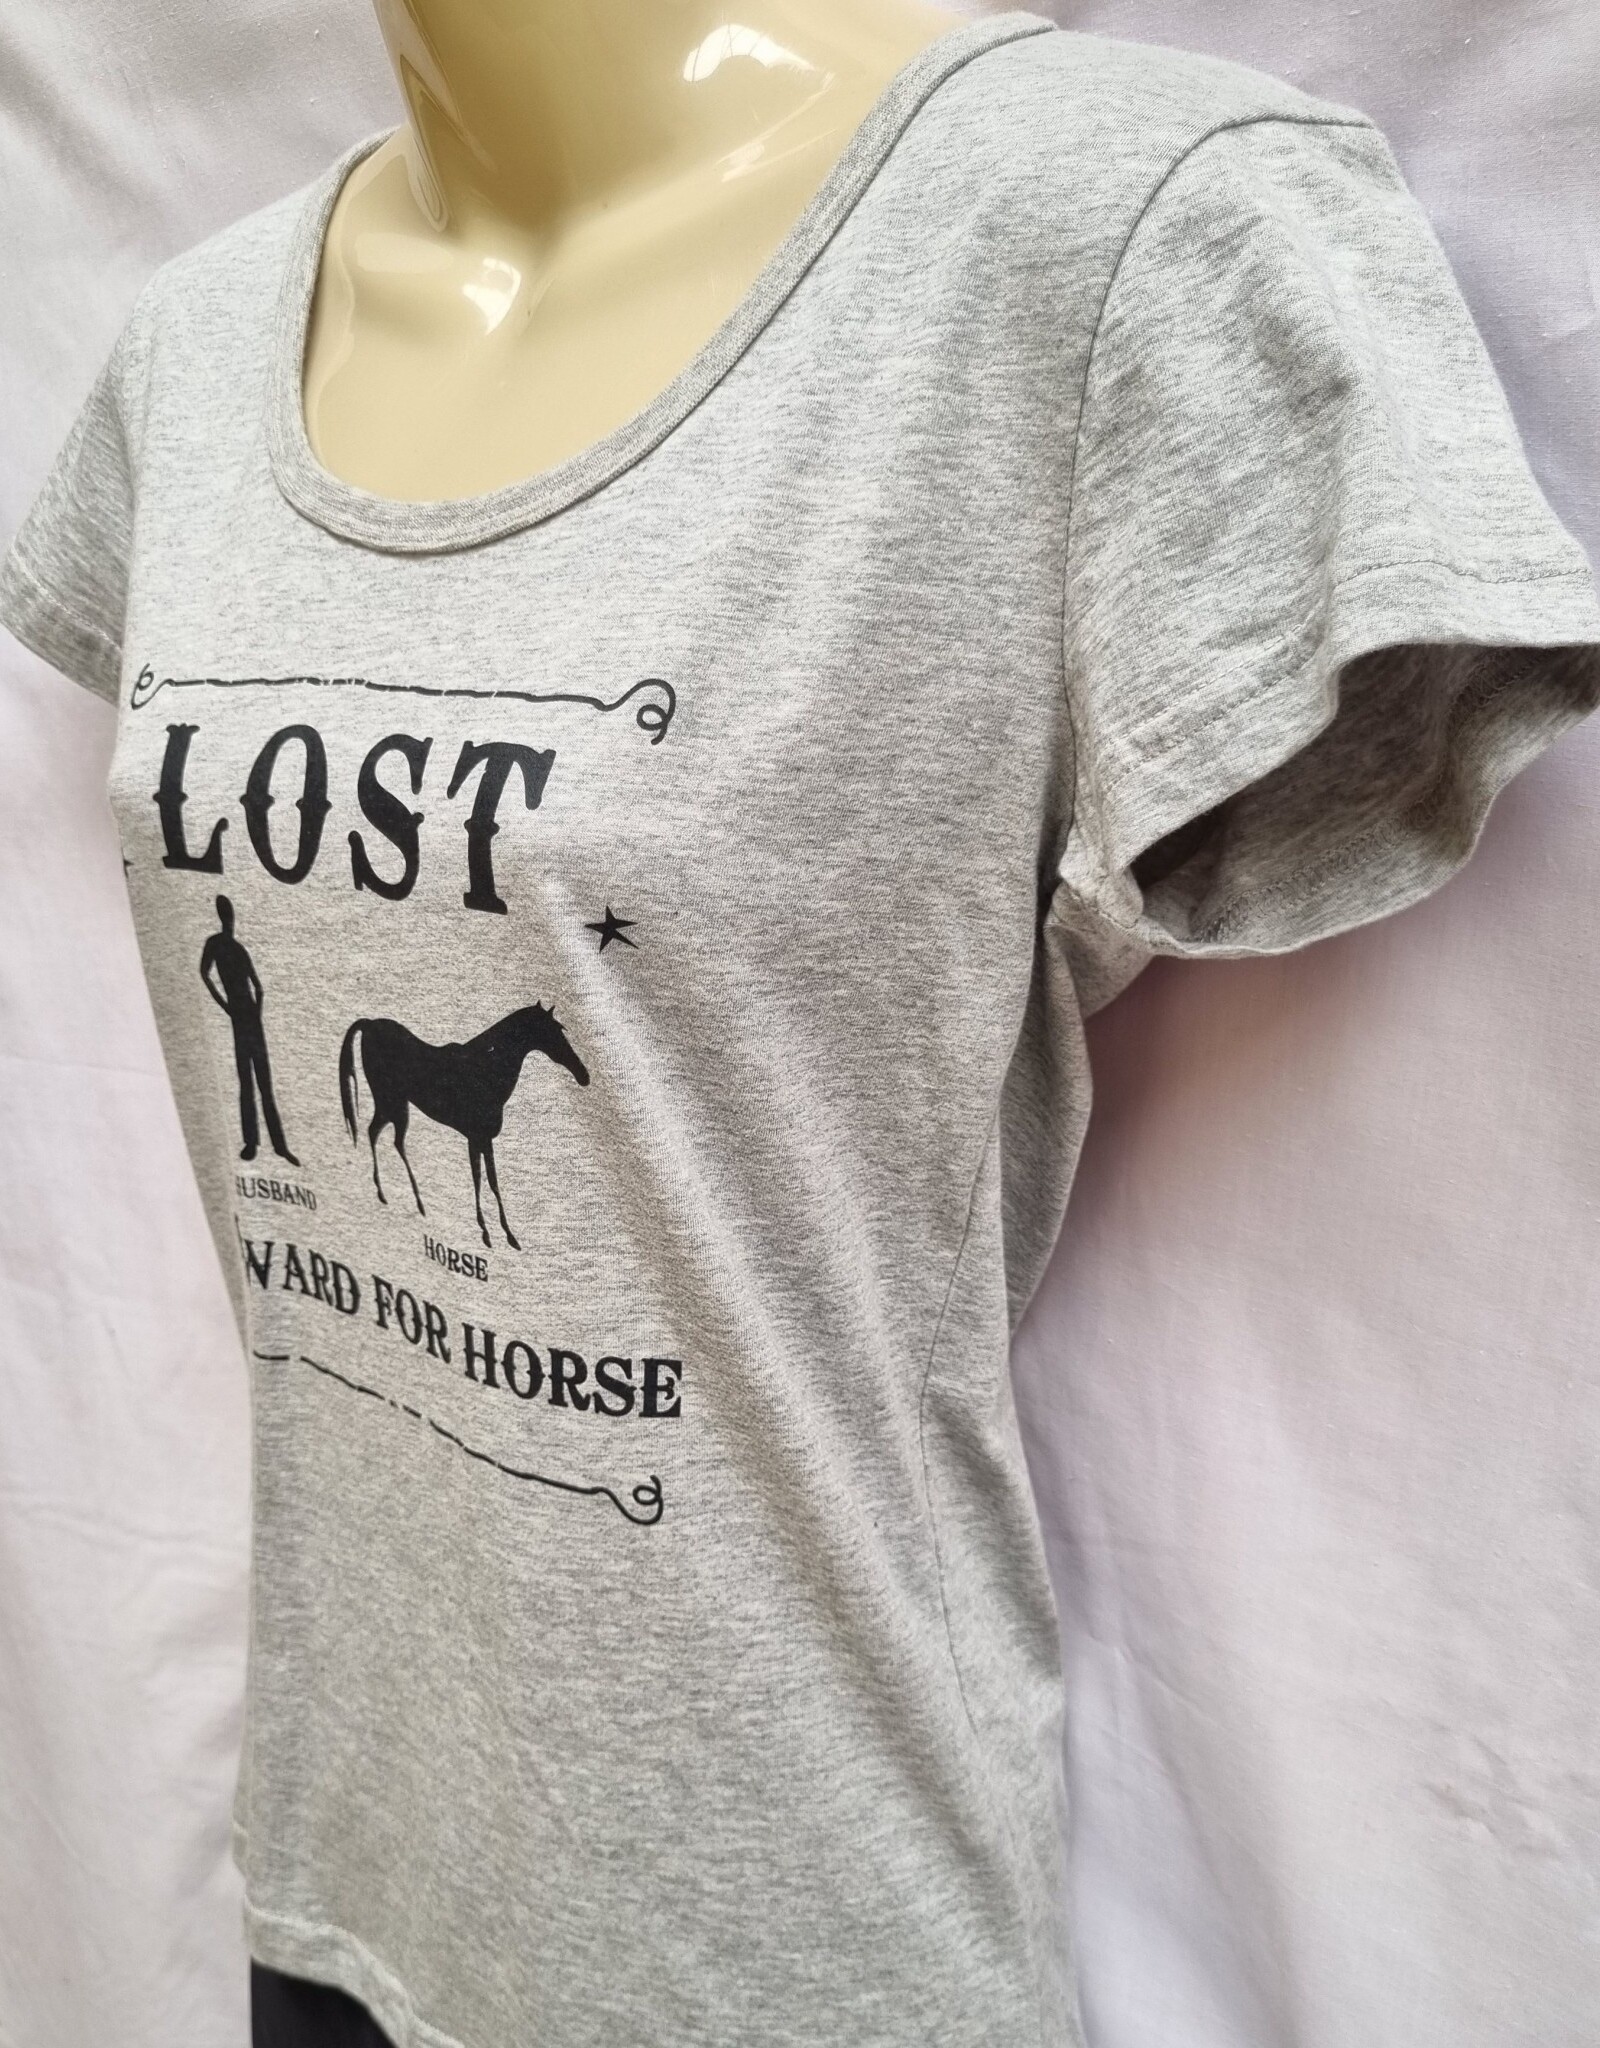 Giddy Up Girl T-Shirt Lost (Husband, Horse) Reward Size M